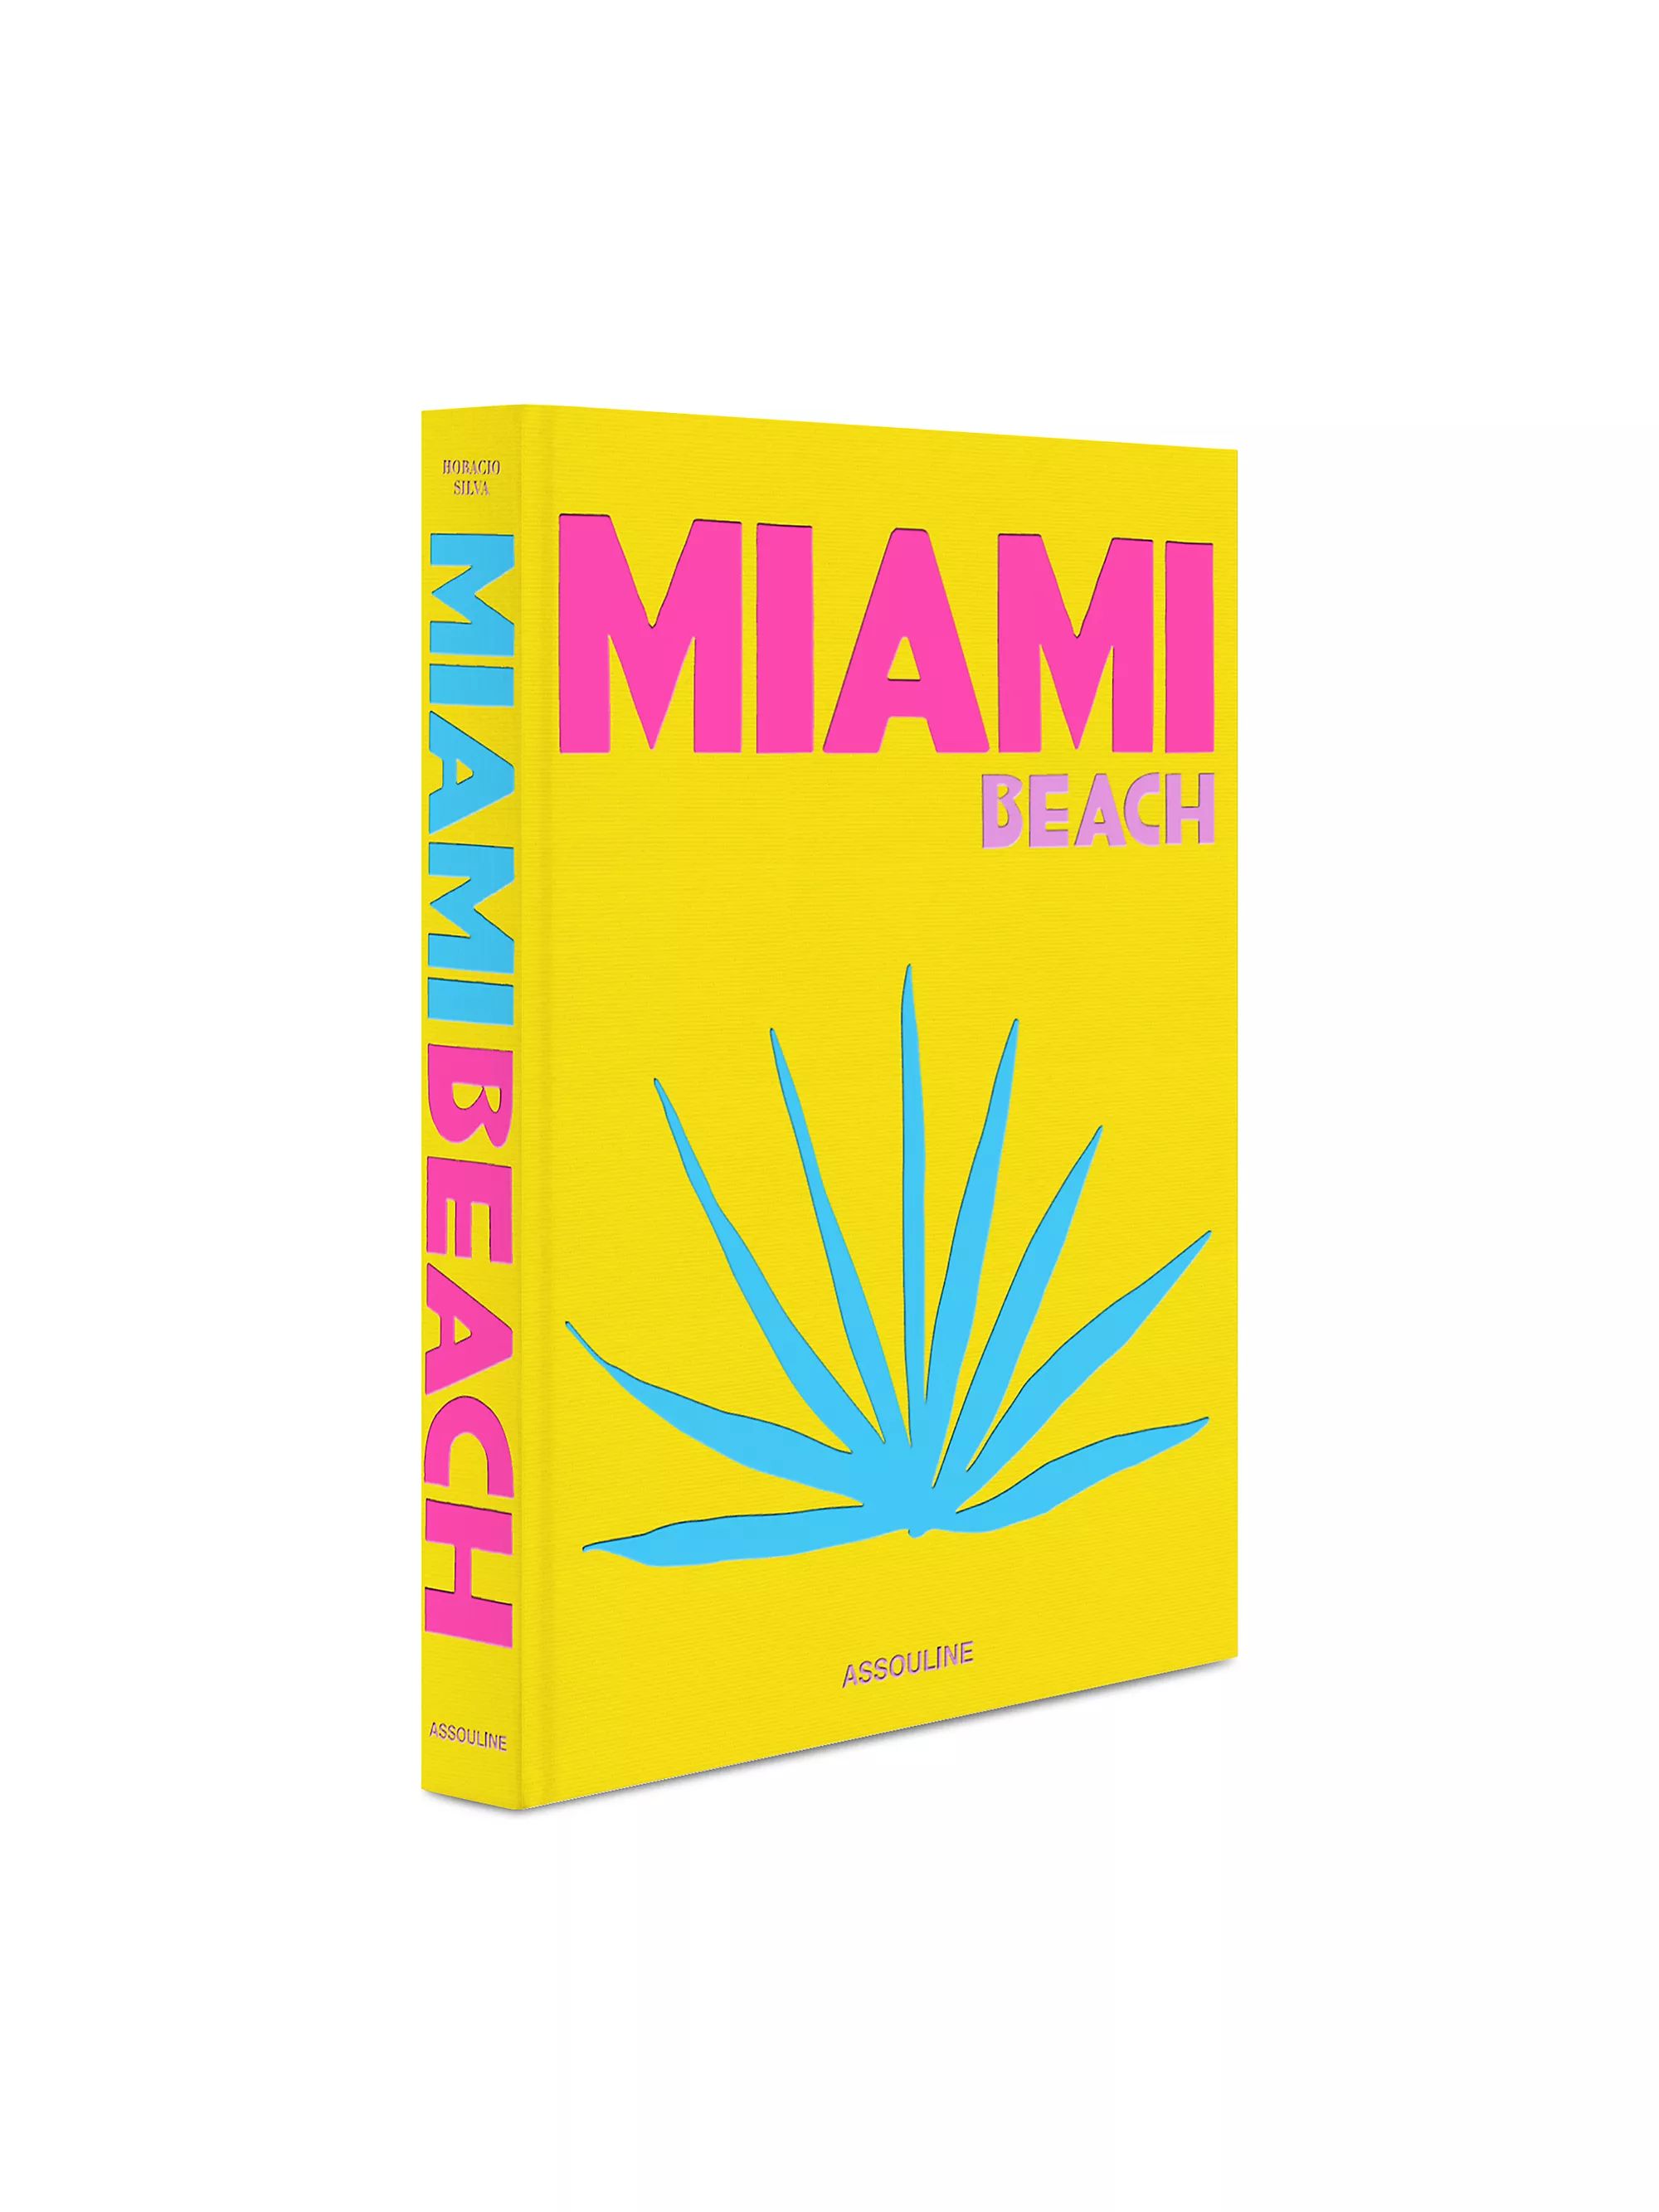 Miami Beach | Saks Fifth Avenue